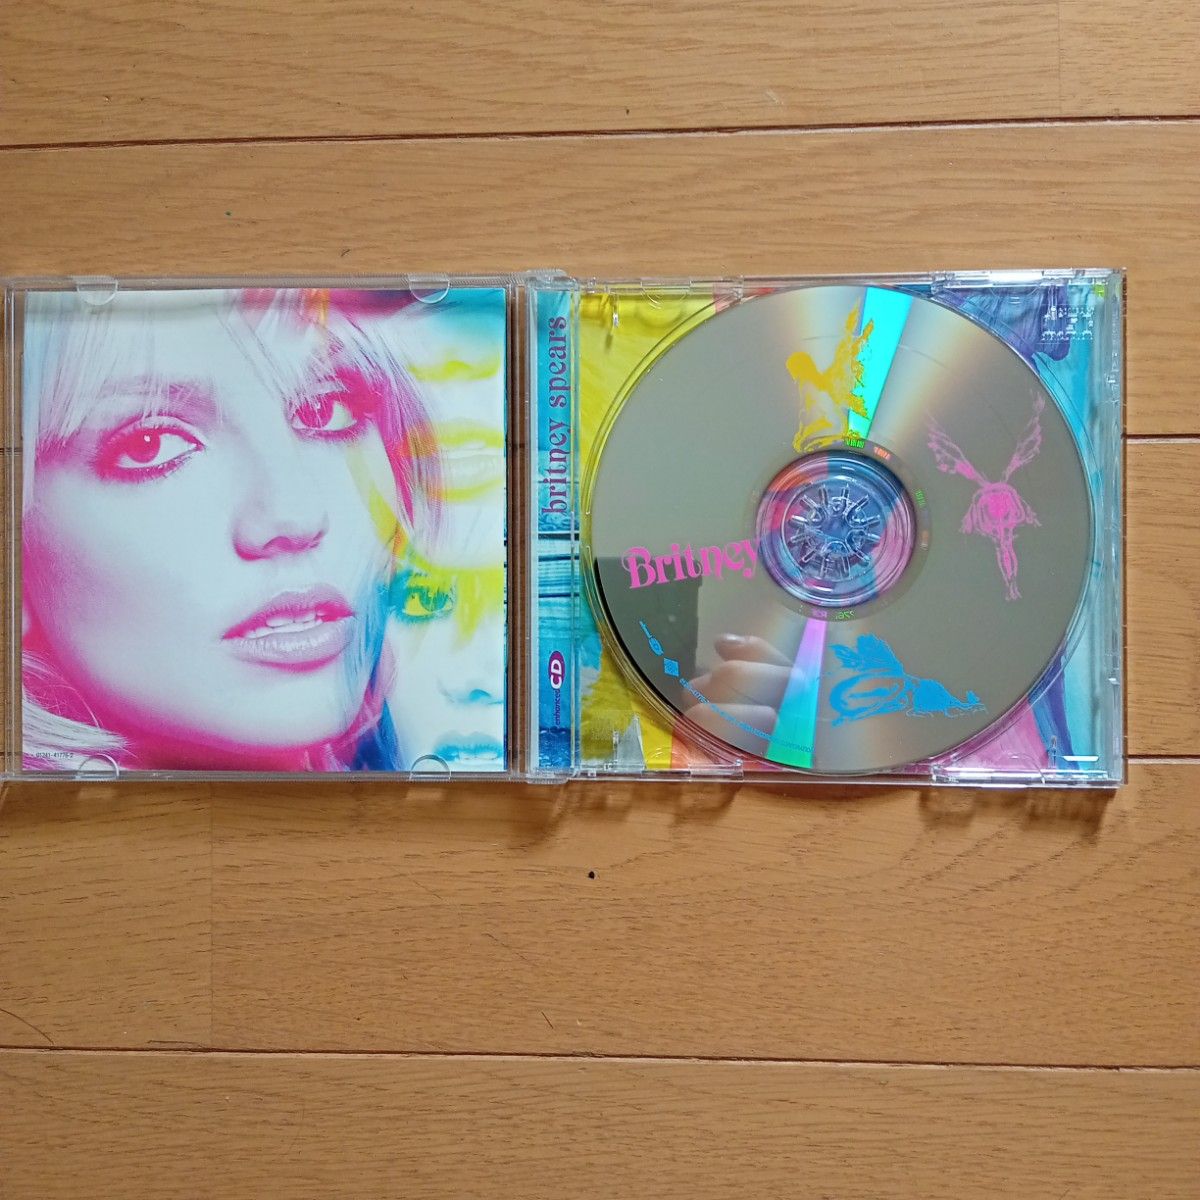 Britney Spears (ブリトニー・スピアーズ)アルバム「Britney」アメリカで購入